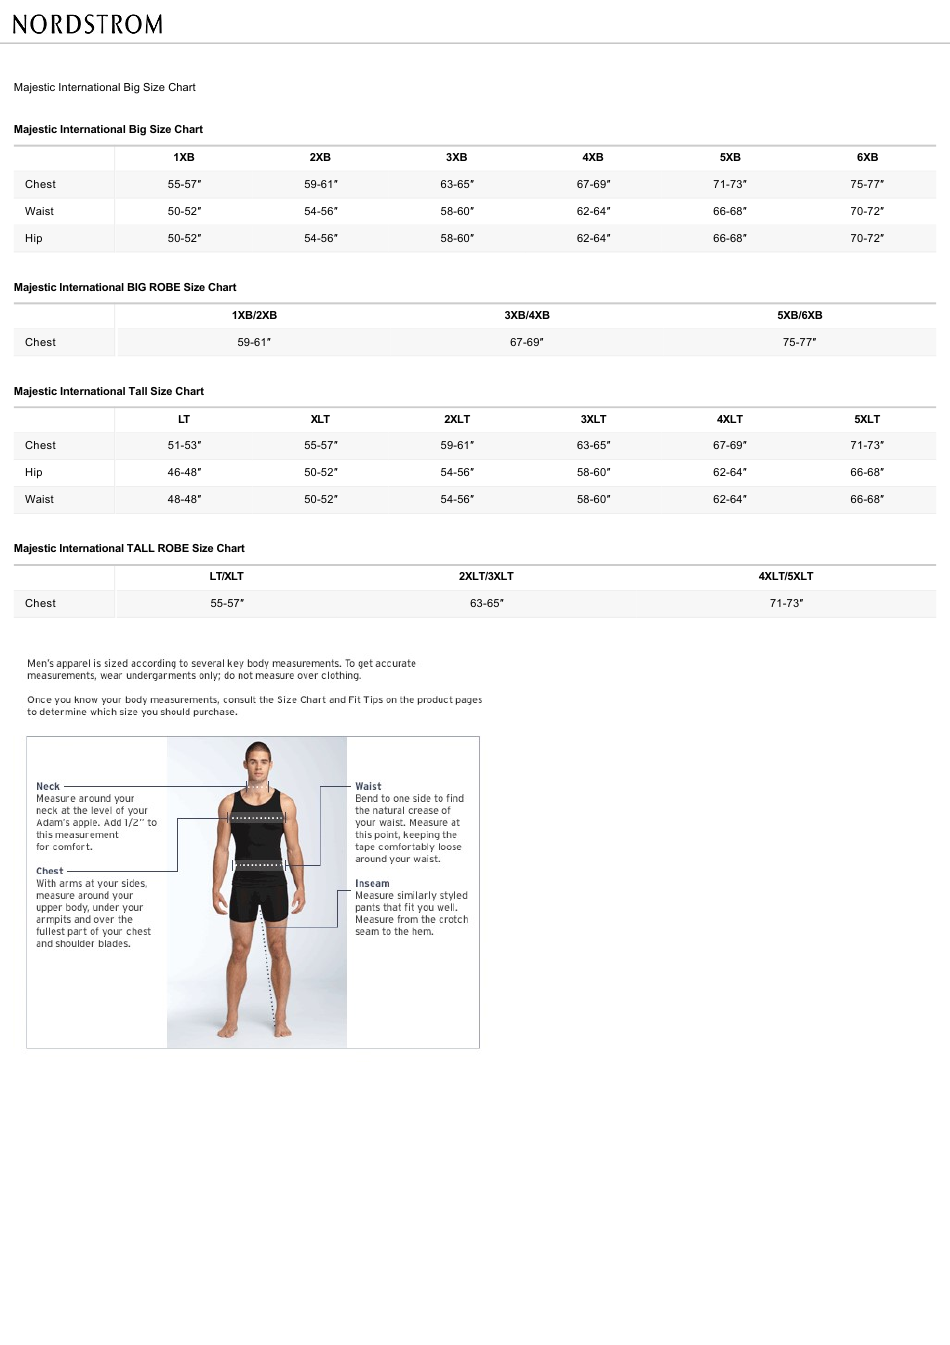 Big Men's Sportswear Size Chart - Nordstrom Download Printable PDF ...